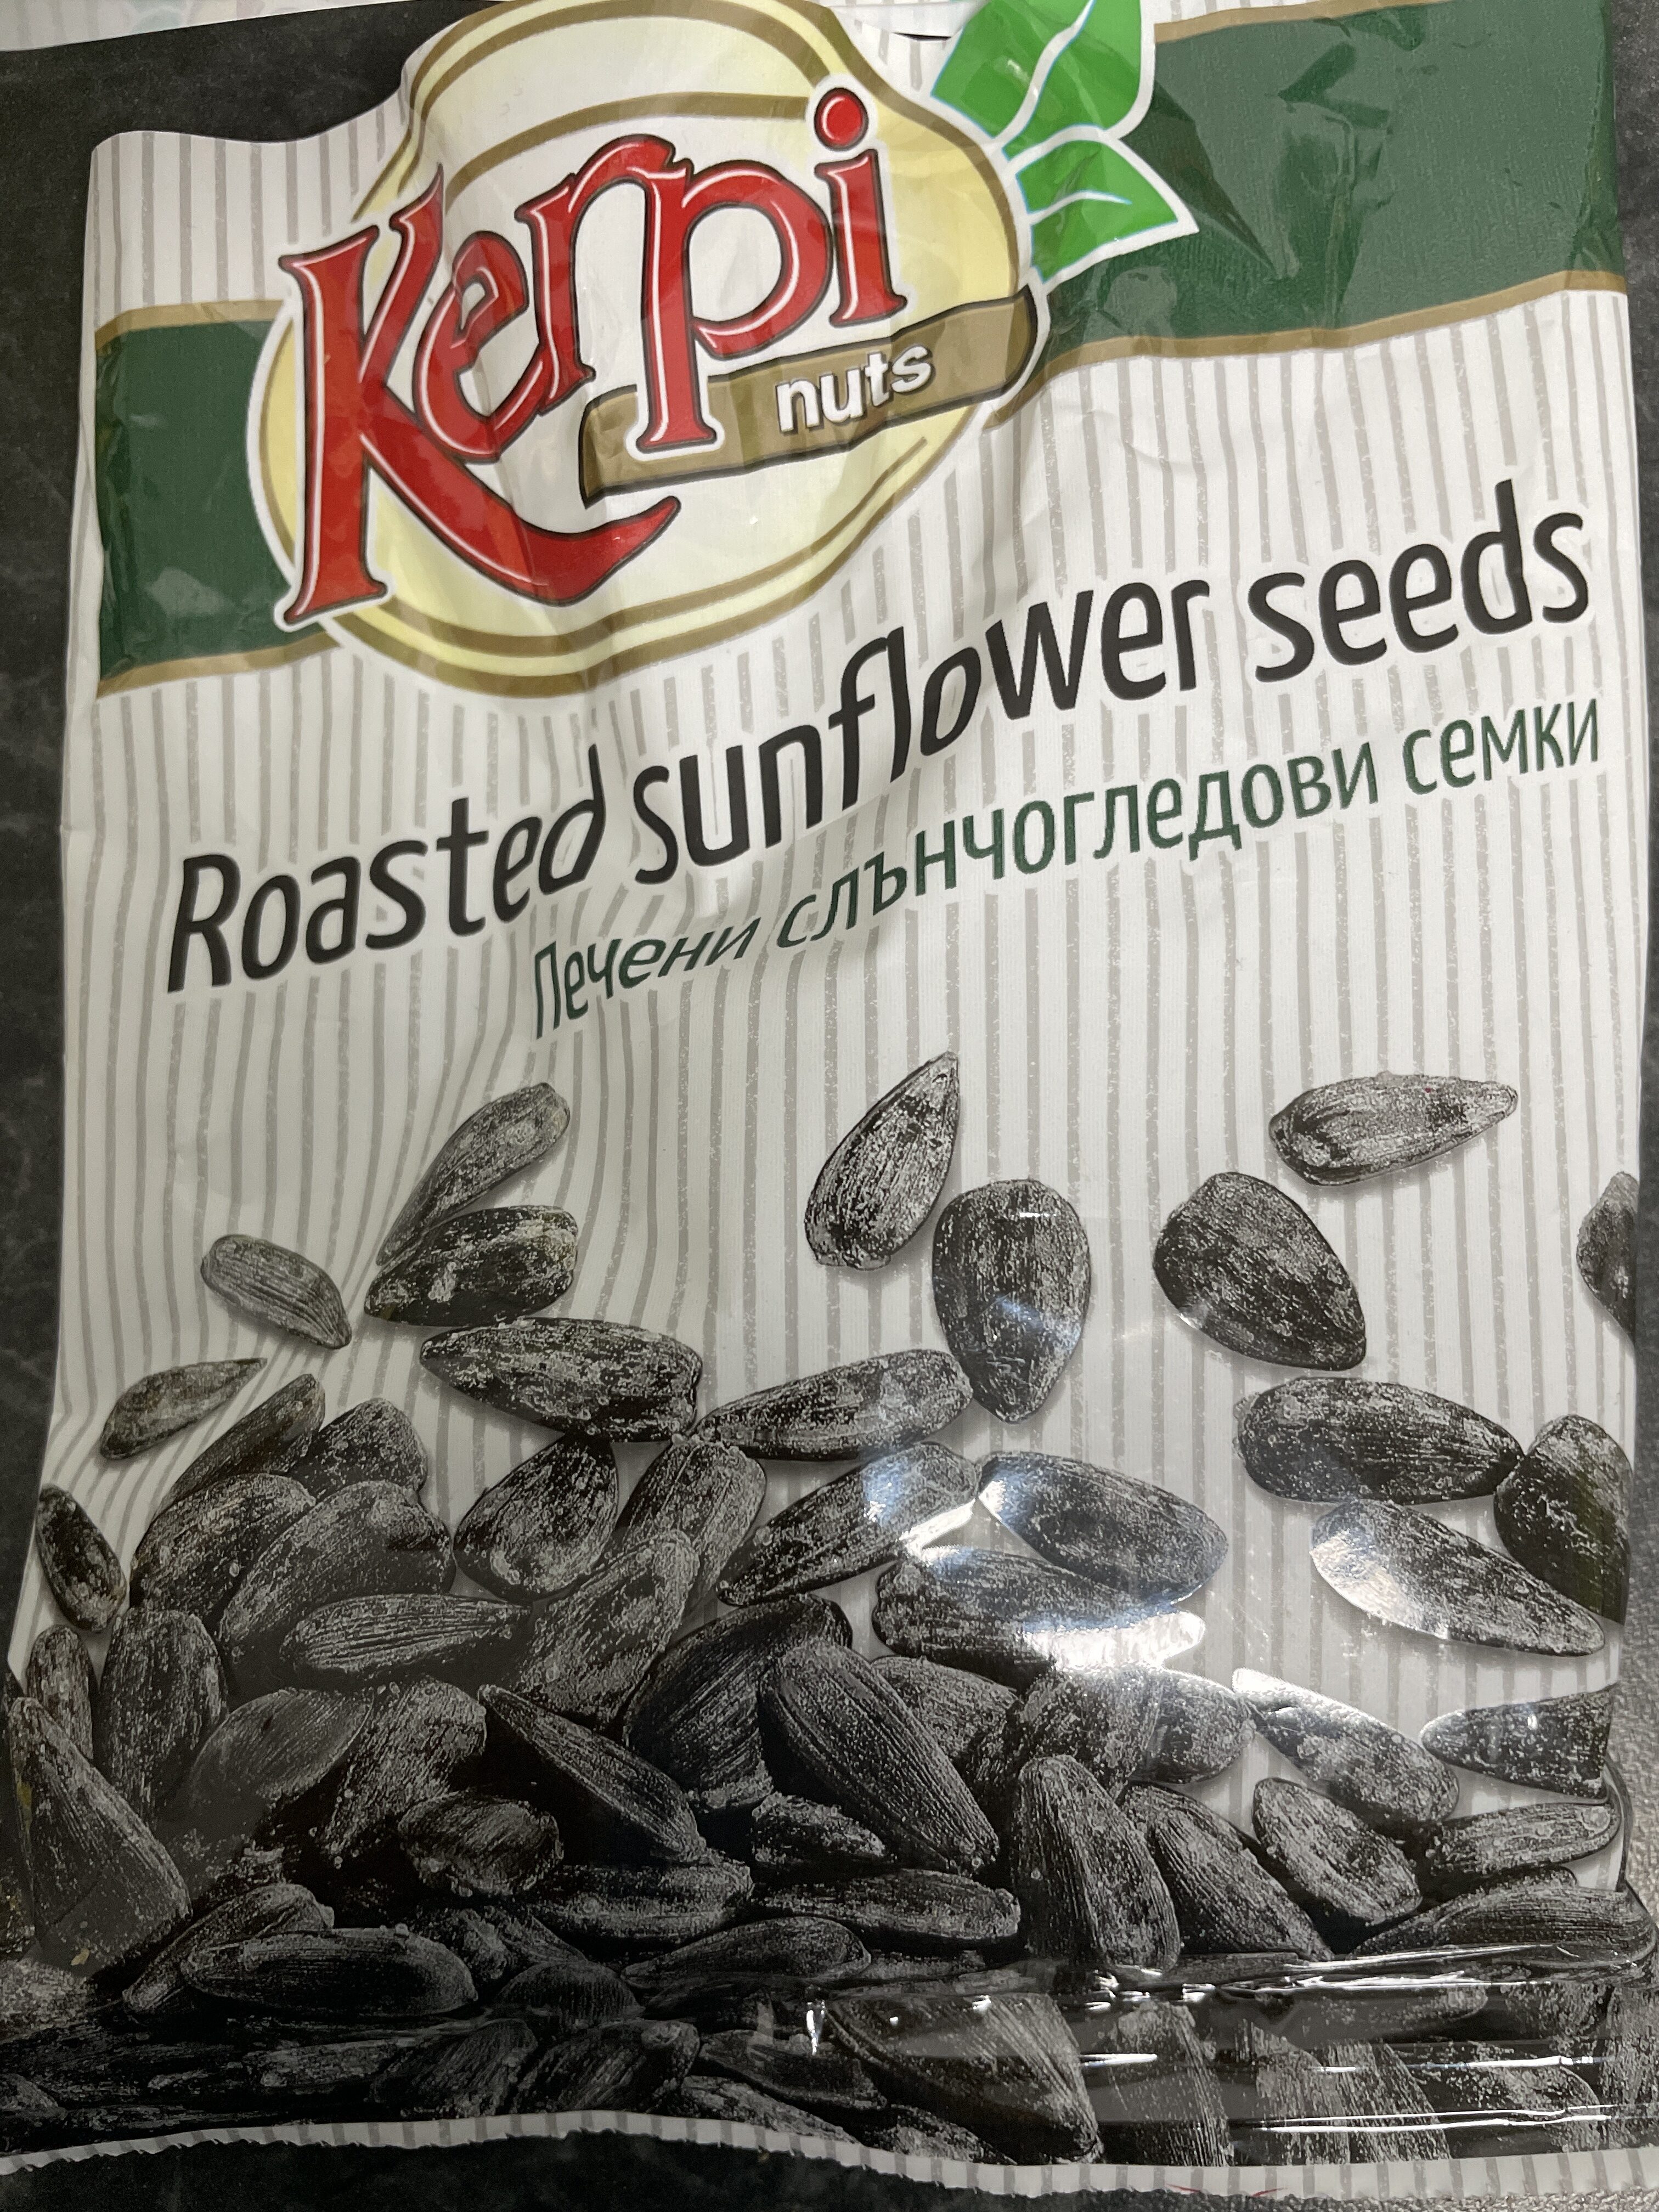 Roasted sunflower seeds - Produkt